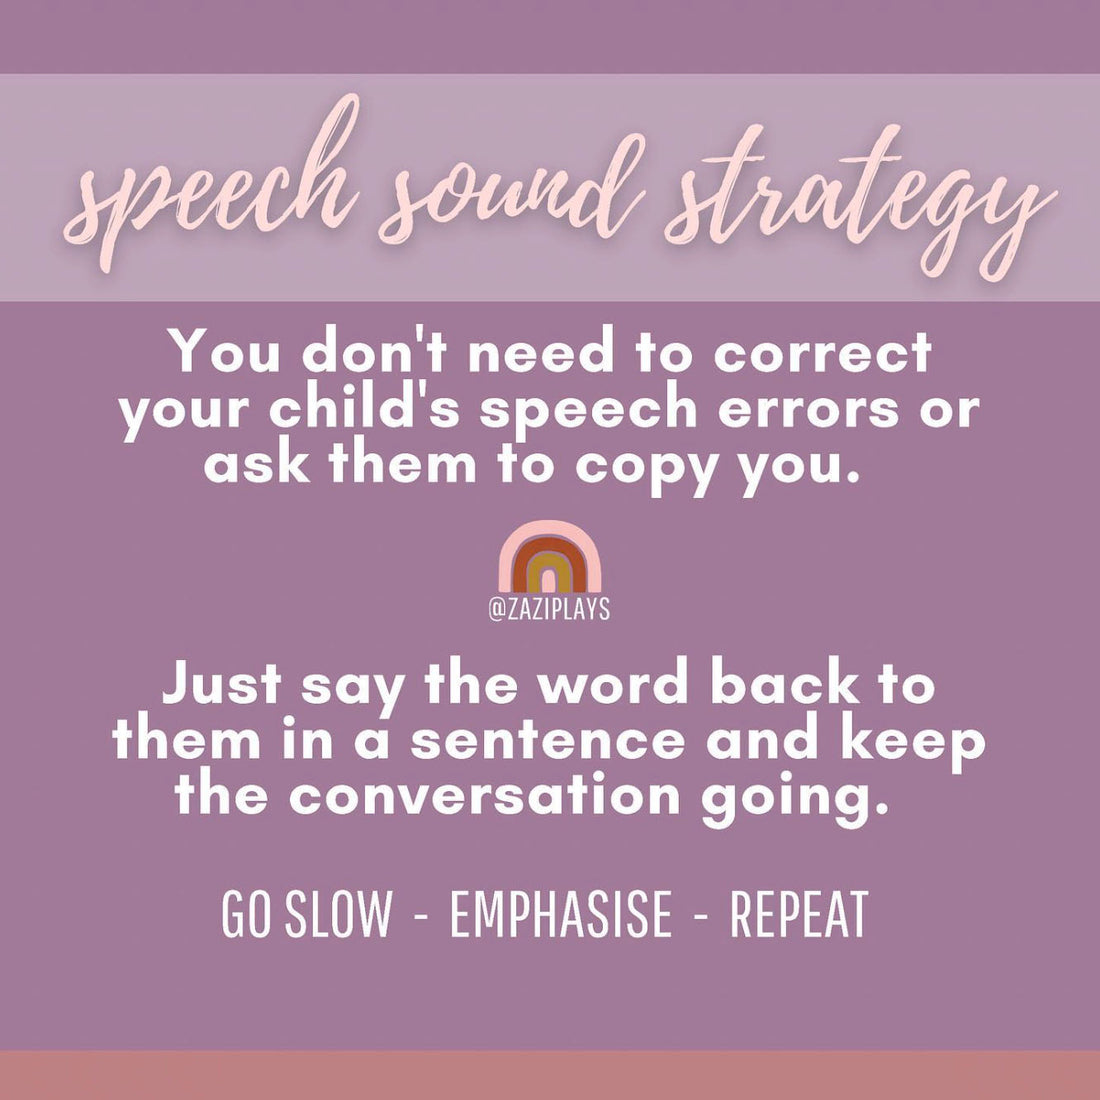 Speech Sound Strategy